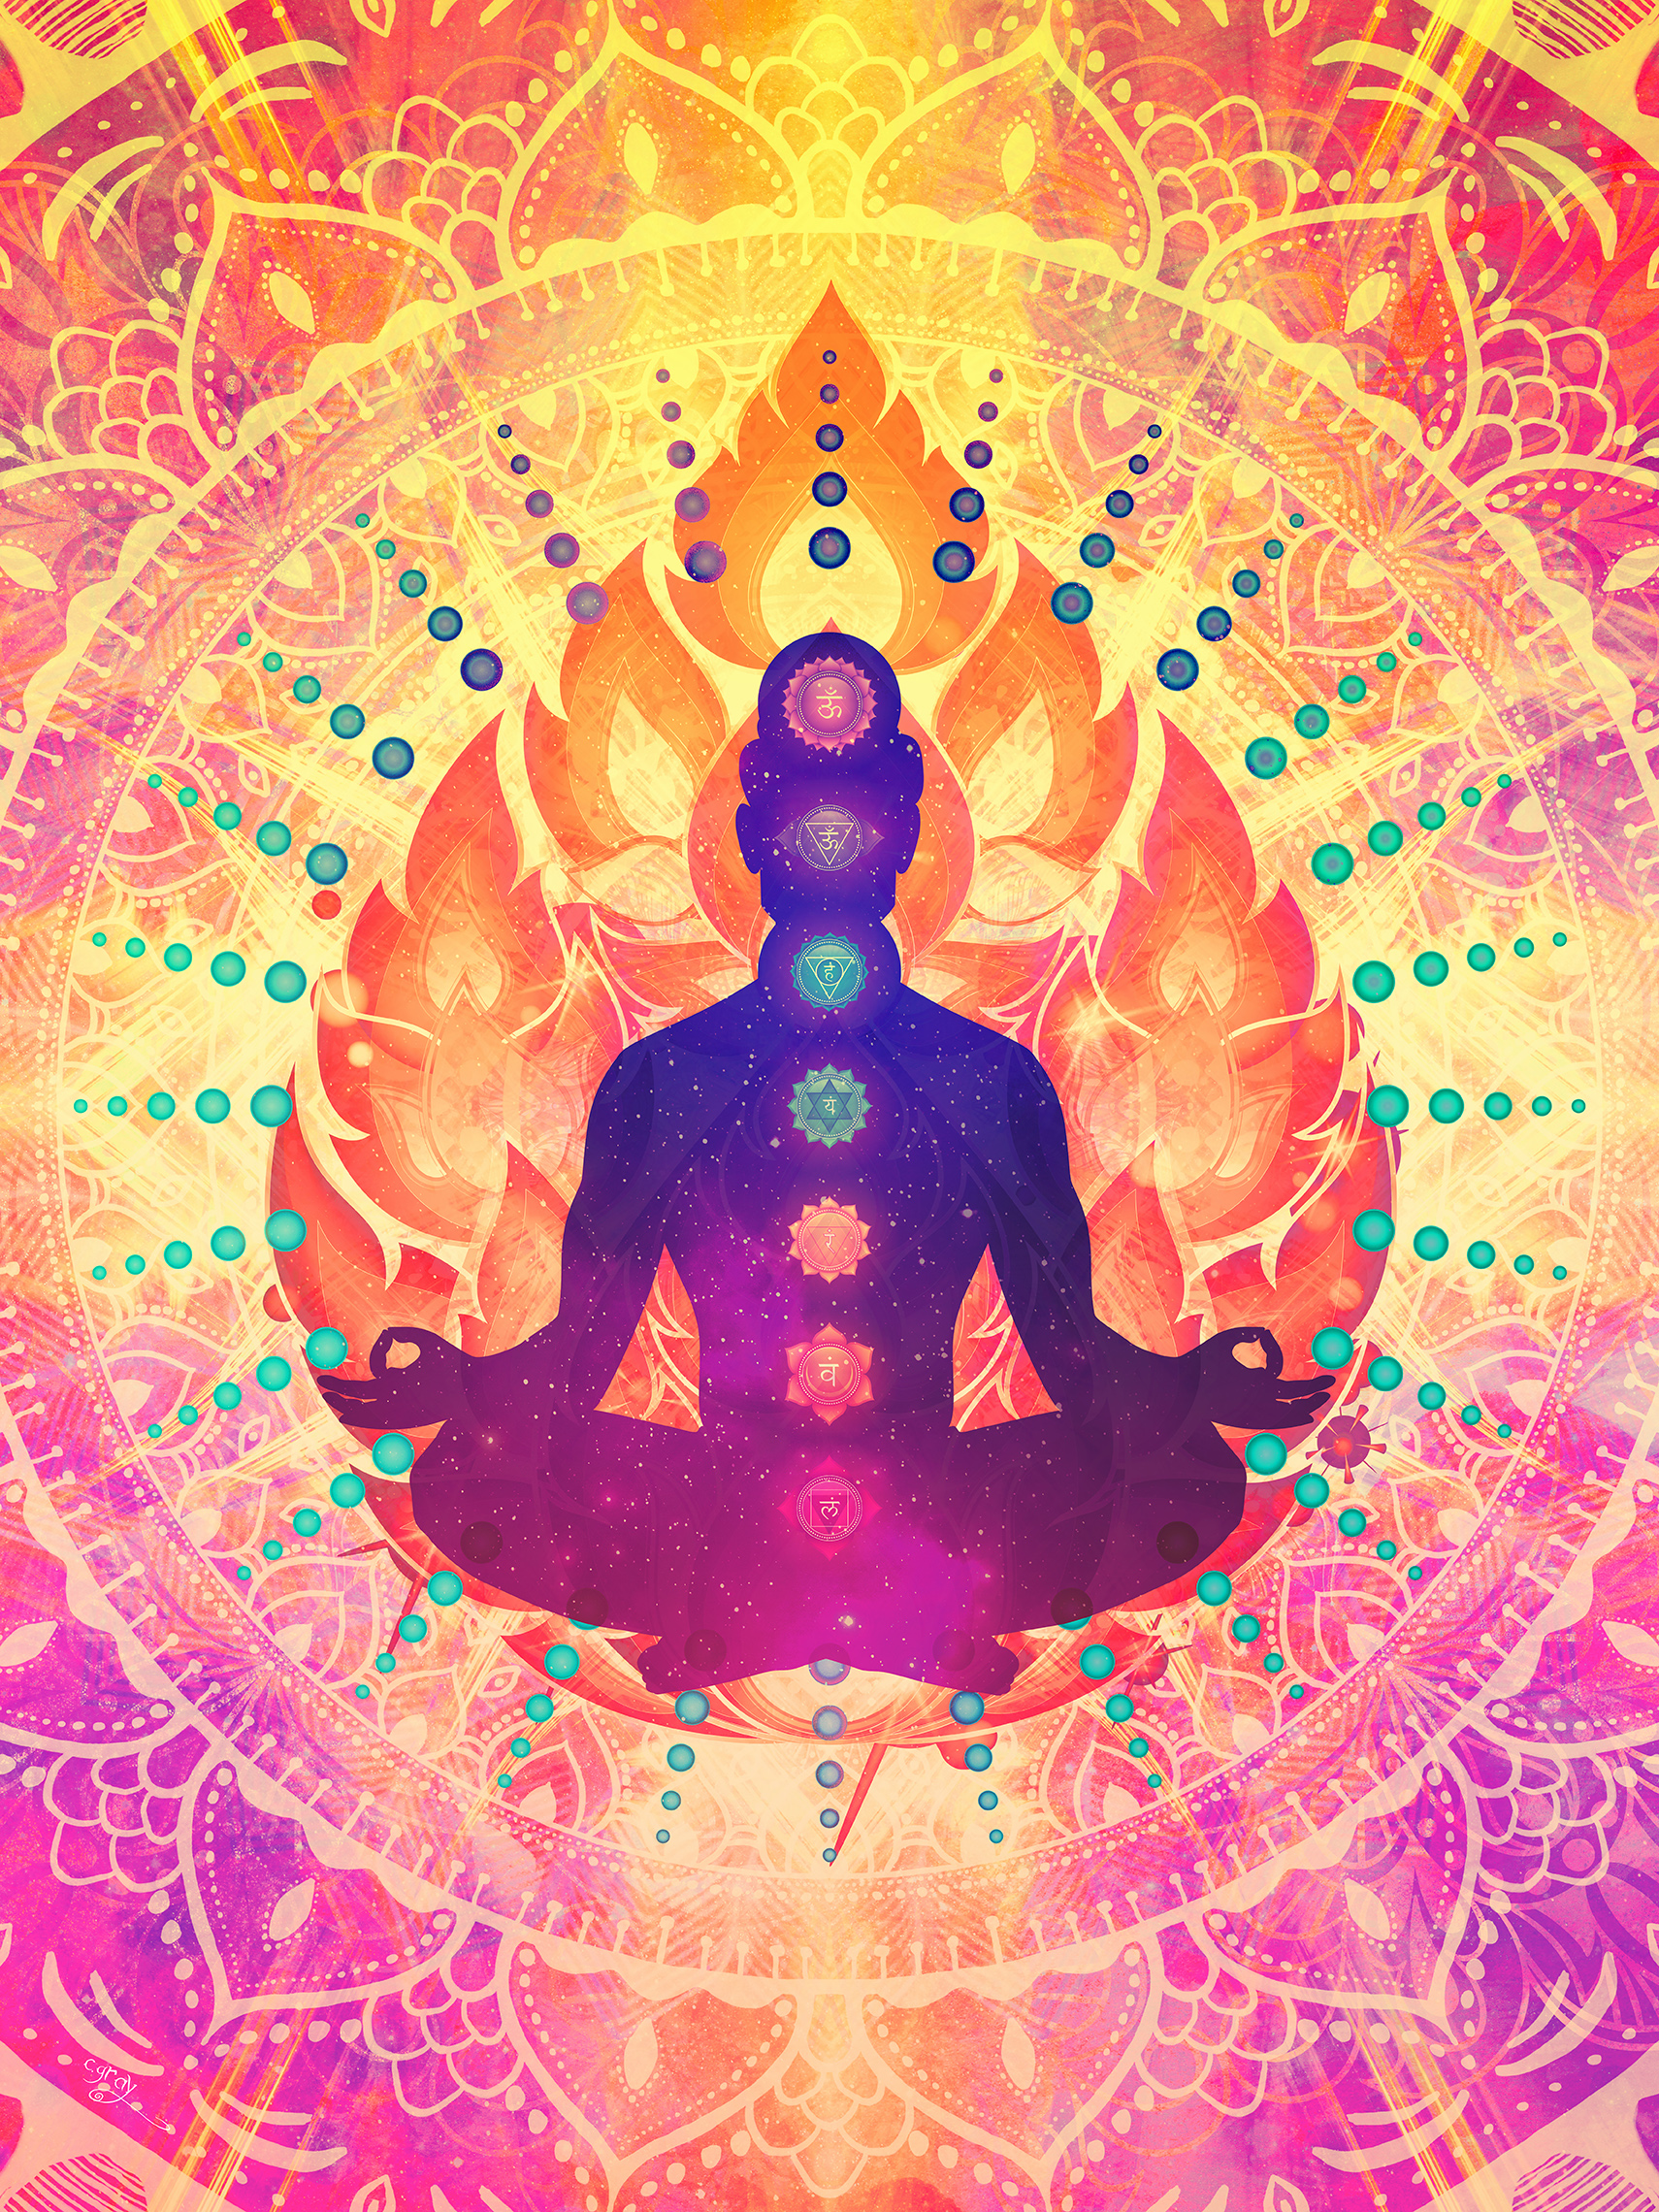 chakra meditation artwork featuring person meditating with mandala. Art by Cameron Gray